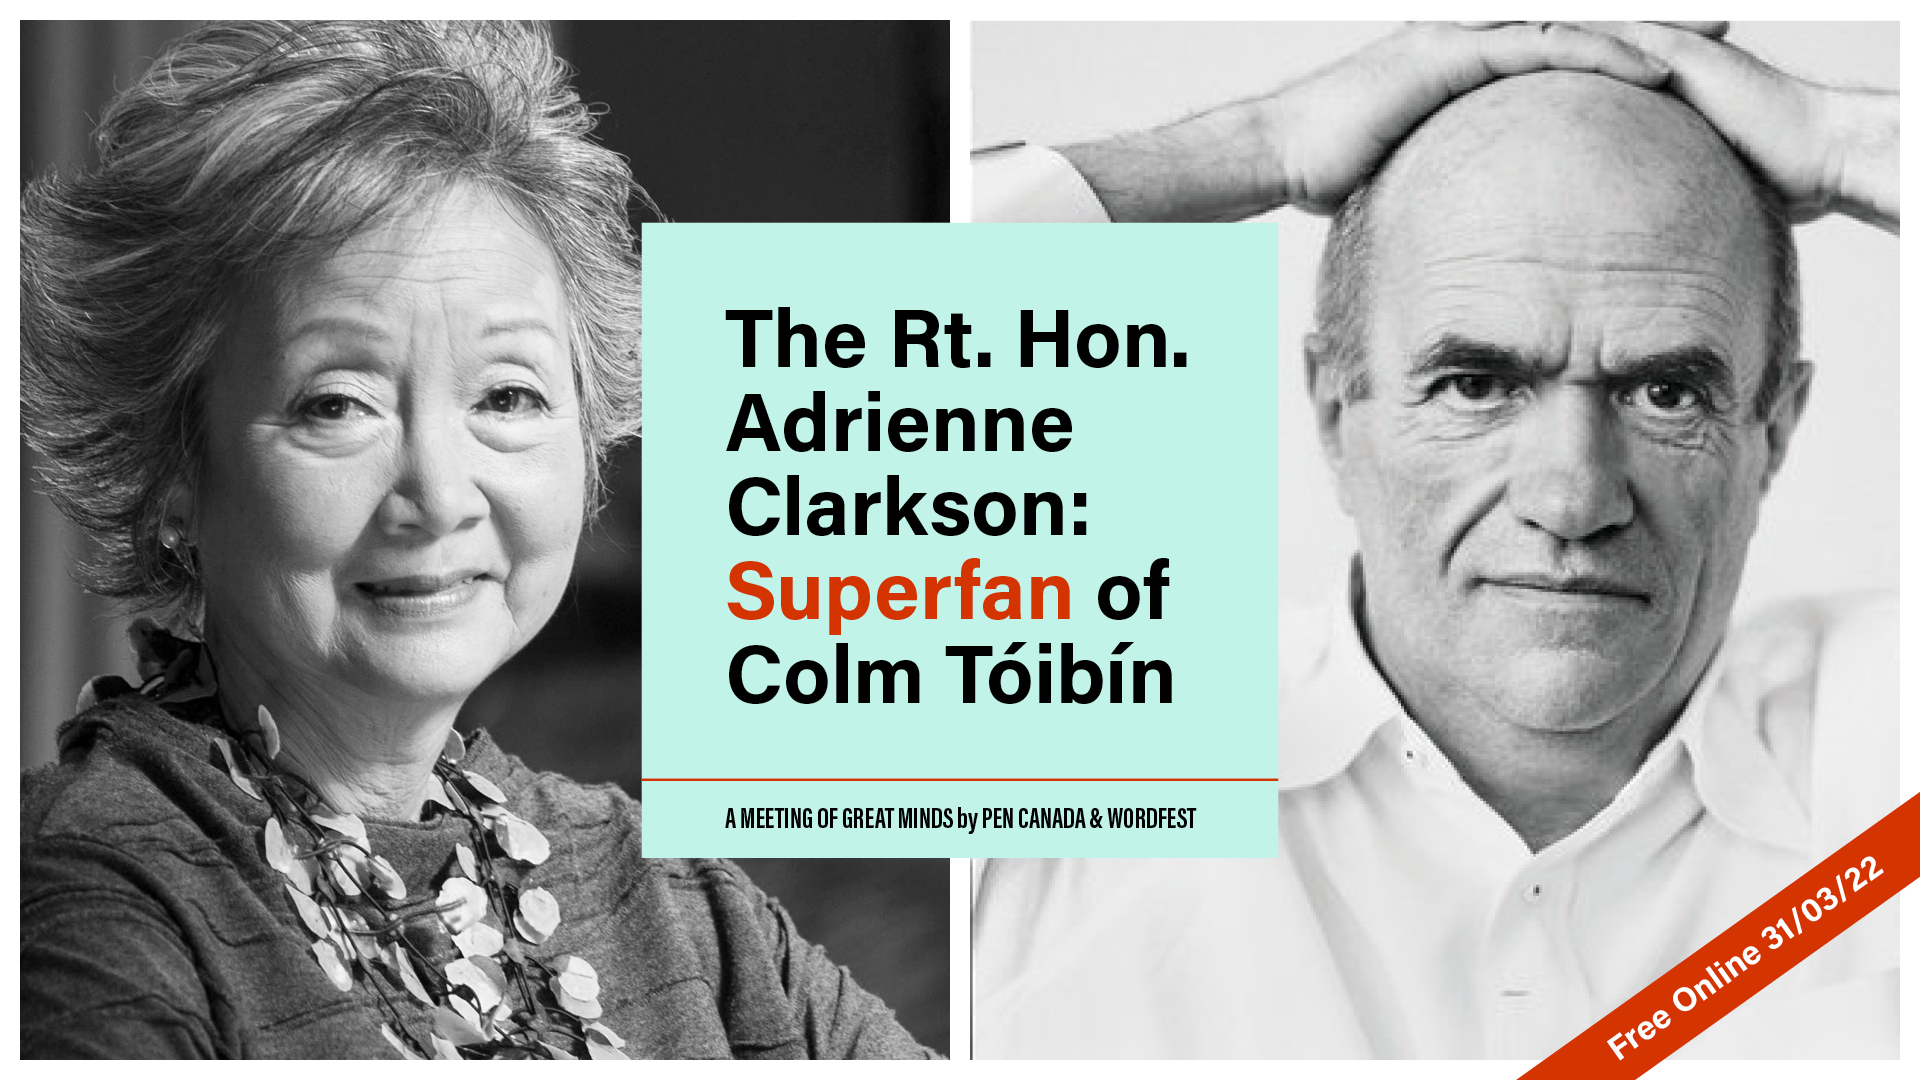 The Rt. Hon. Adrienne Clarkson in Conversation with Colm Tóibín